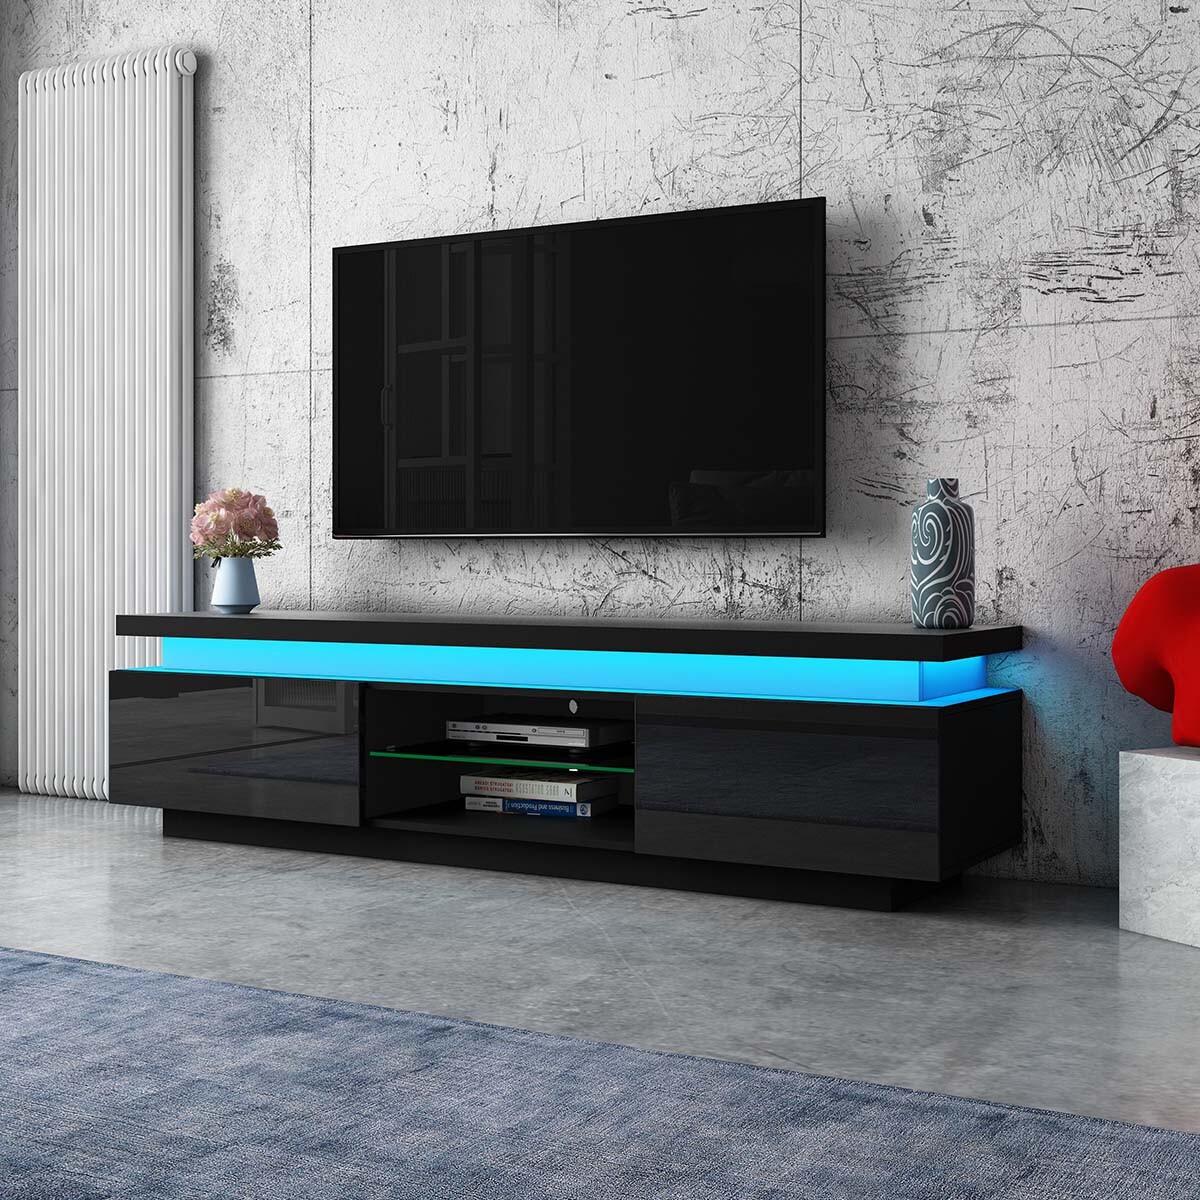 LED TV Cabinet Entertainment Unit - Two Colours Avaulable